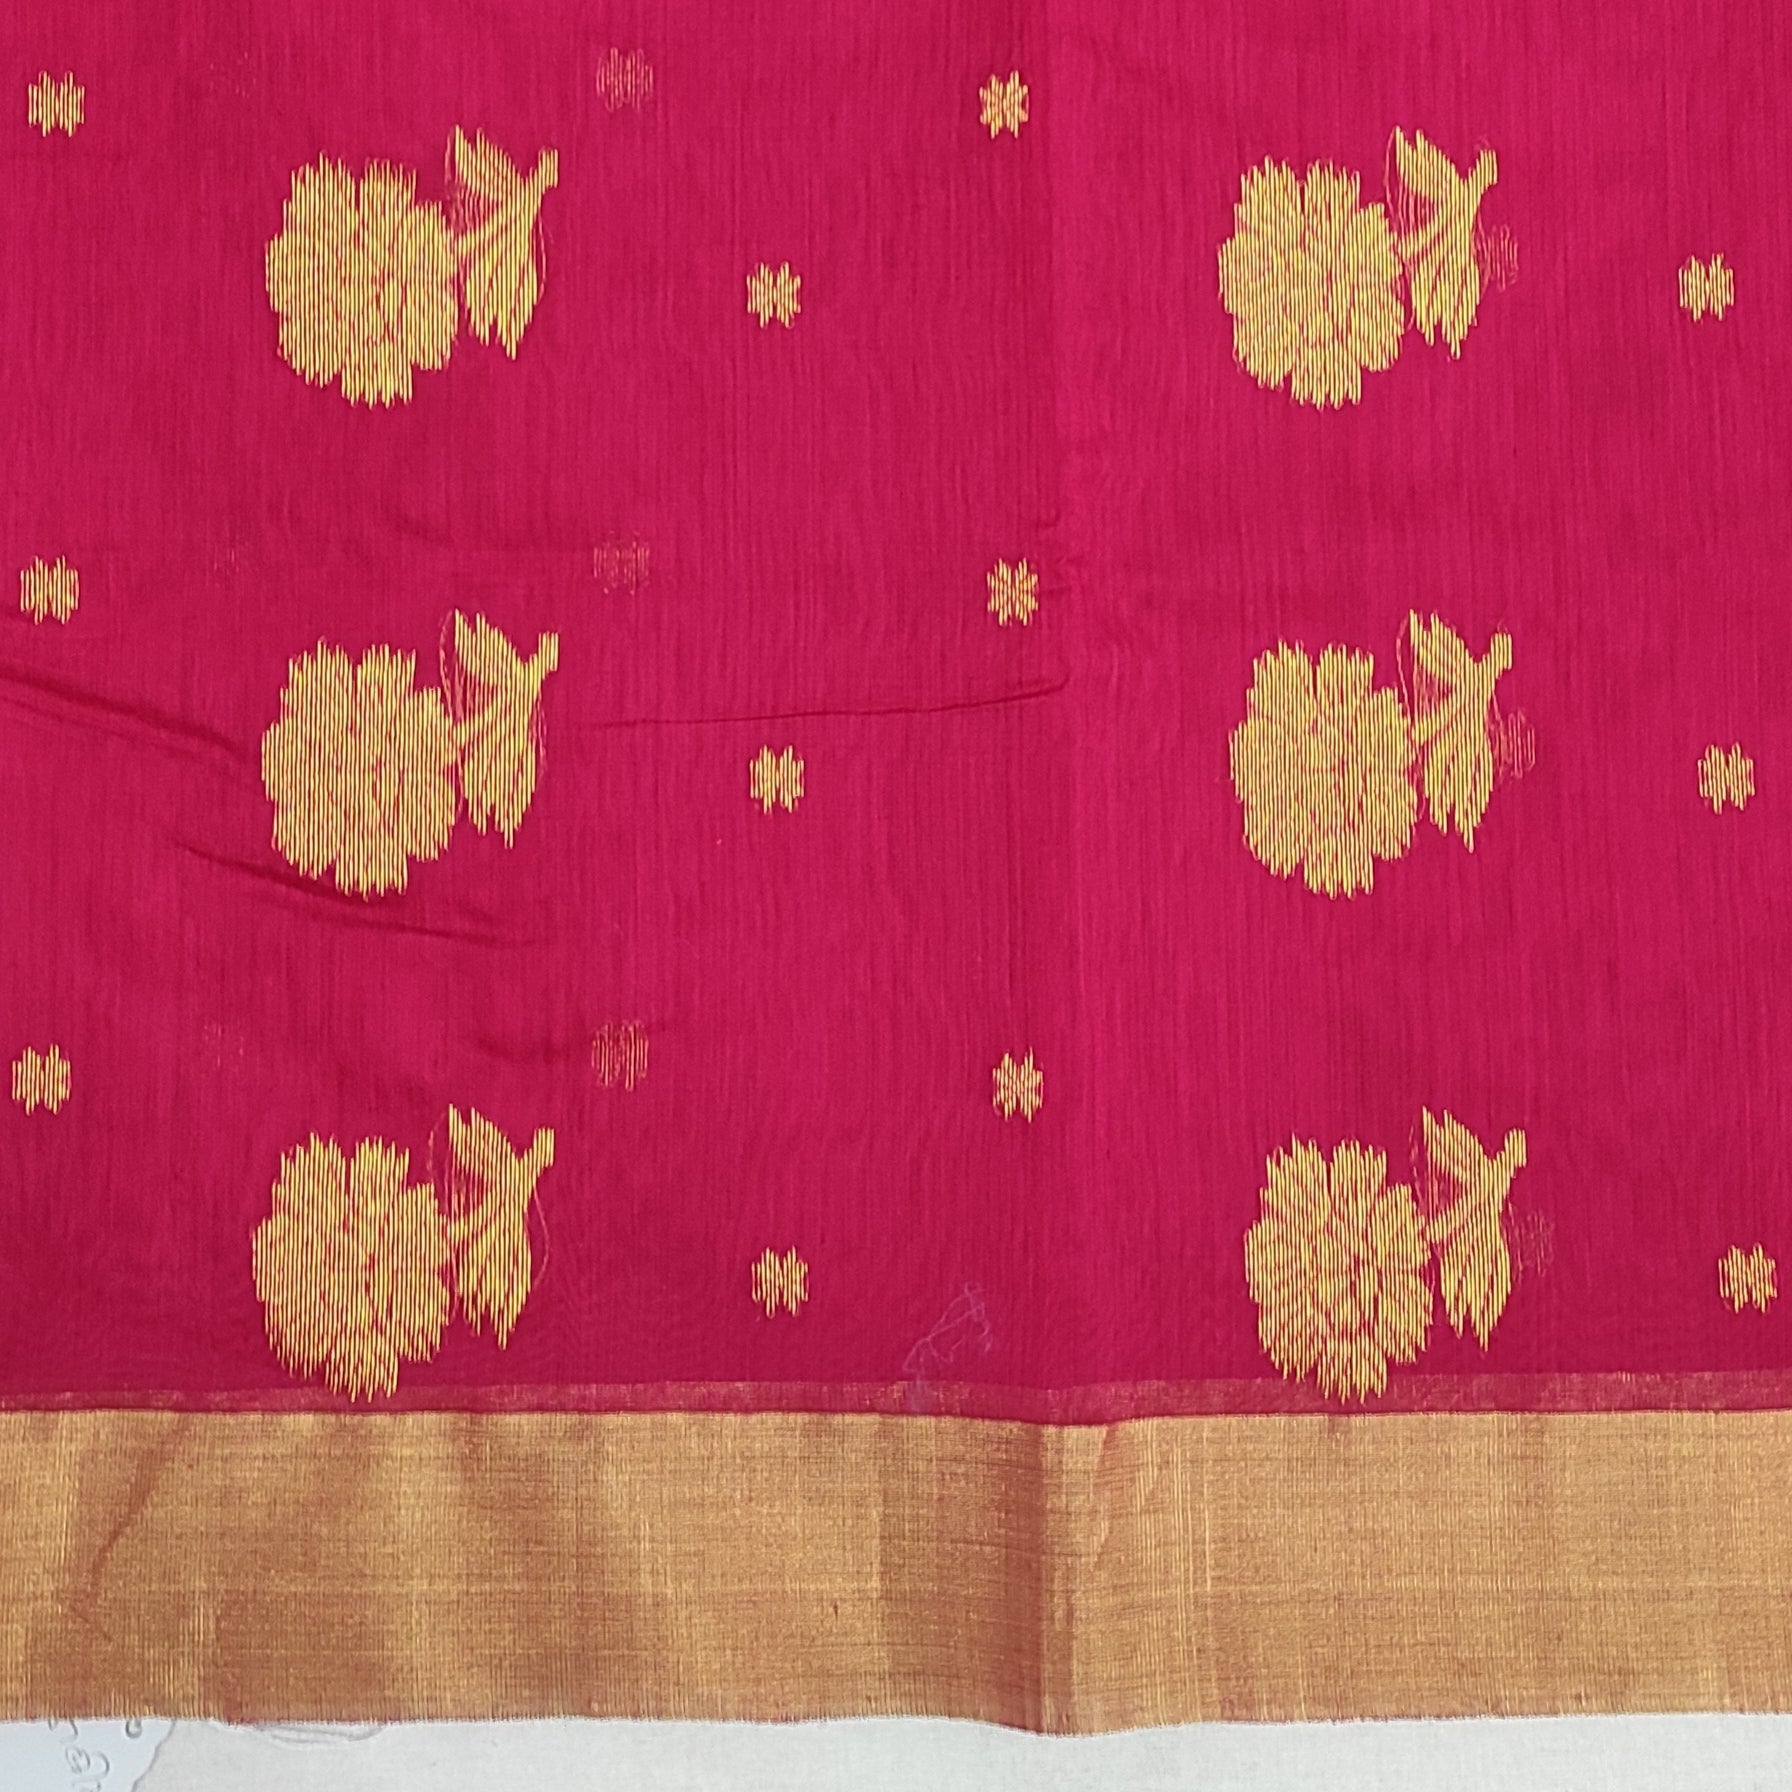 Silk by Mercerised cotton Flower Motifs Chanderi saree BV105 - Artsy India